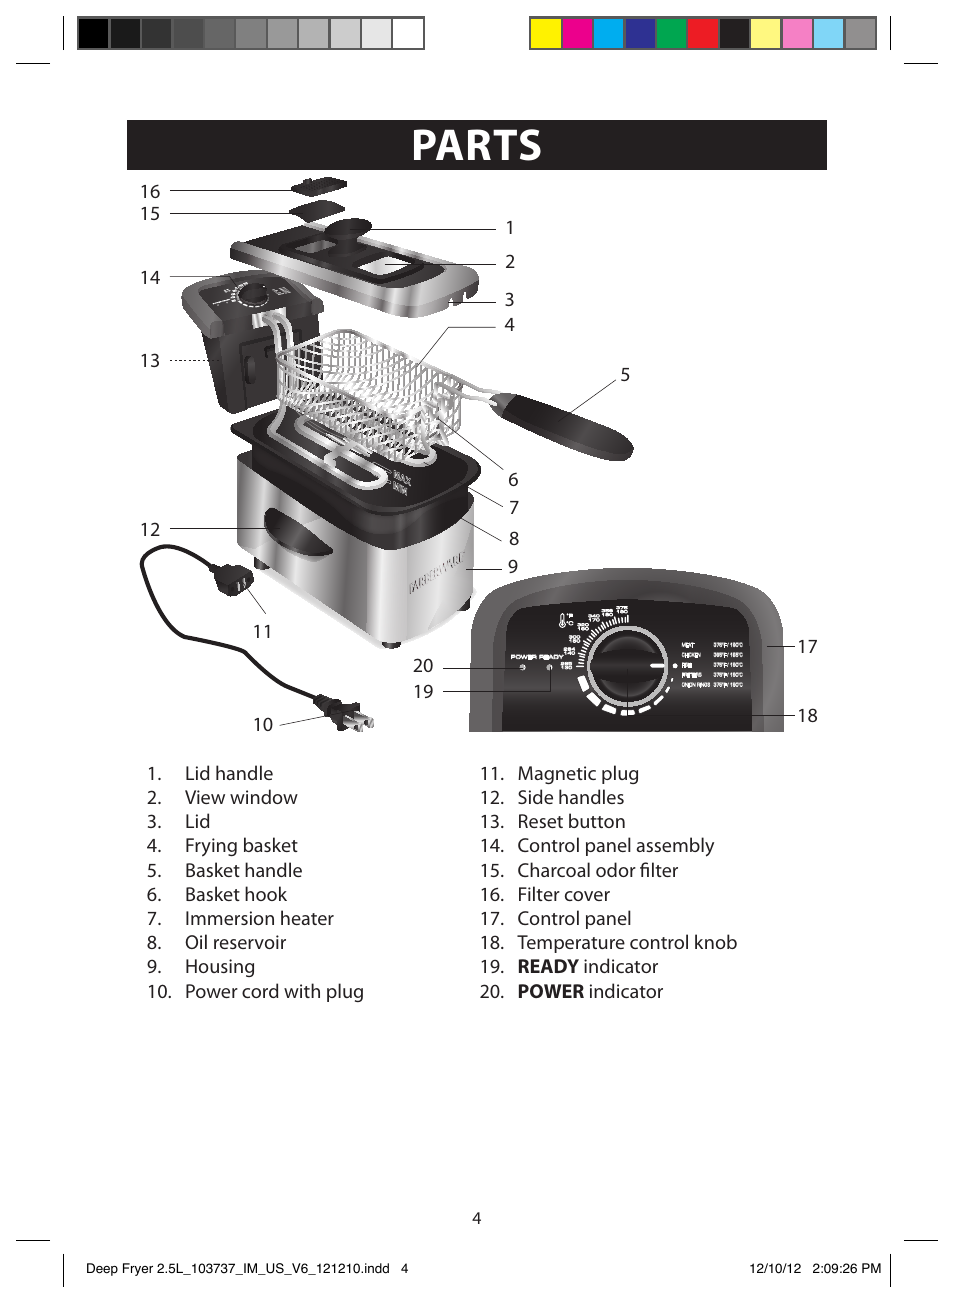 Parts | FARBERWARE 103737 2.5L Dual Deep Fryer User Manual | Page 4 / 15